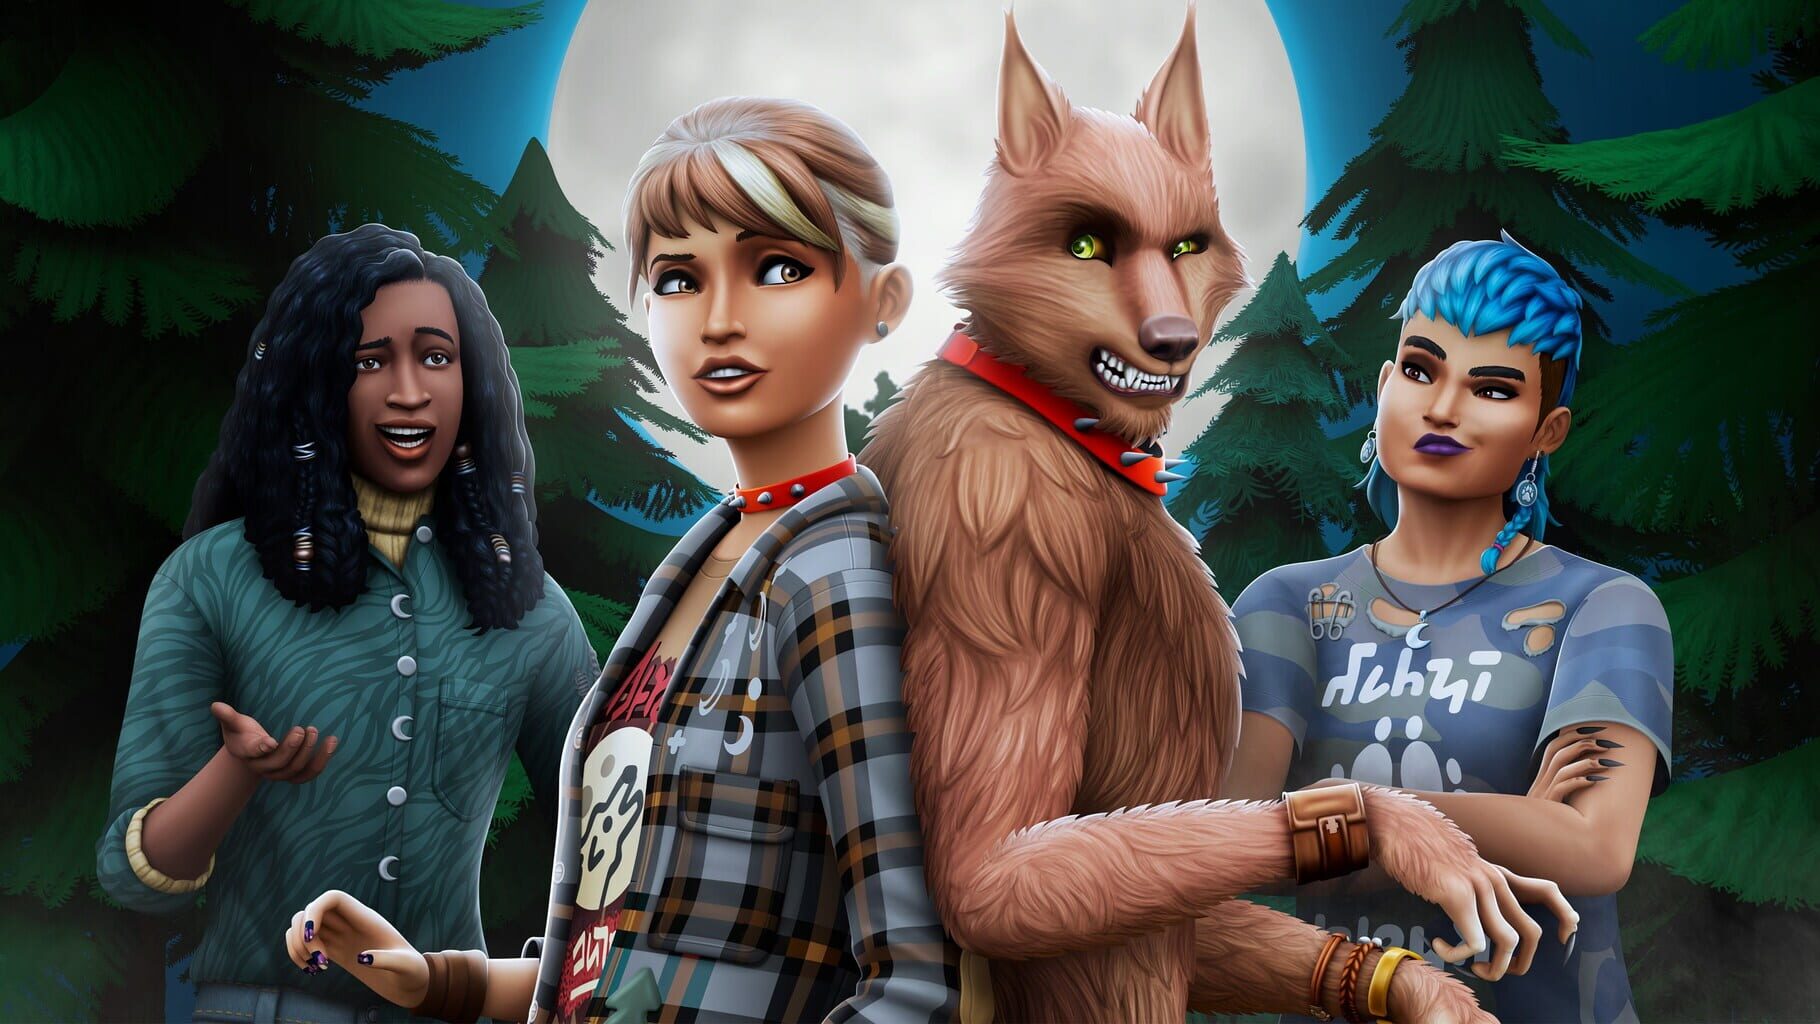 Arte - The Sims 4: Werewolves